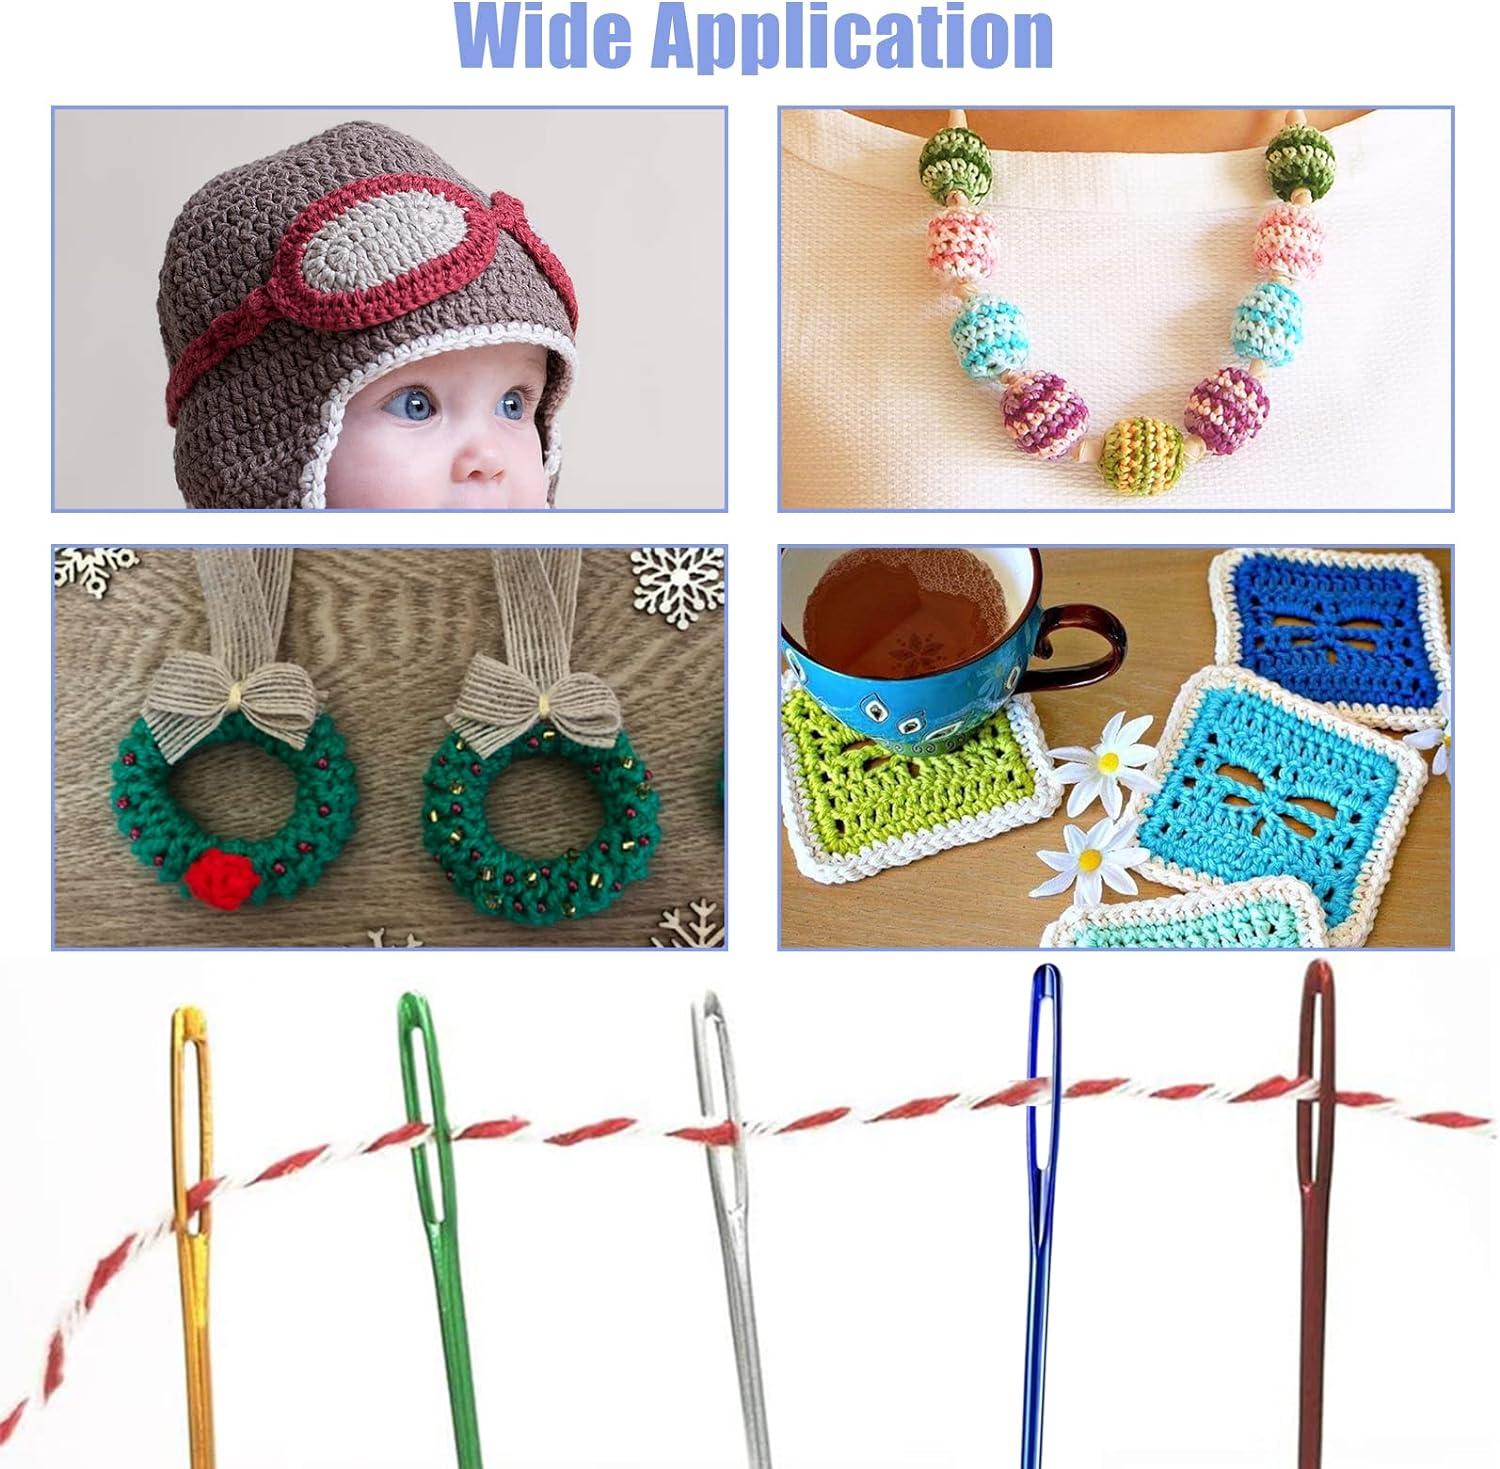 24 Pieces Aluminum Circular Knitting Needles Set with Storage Case